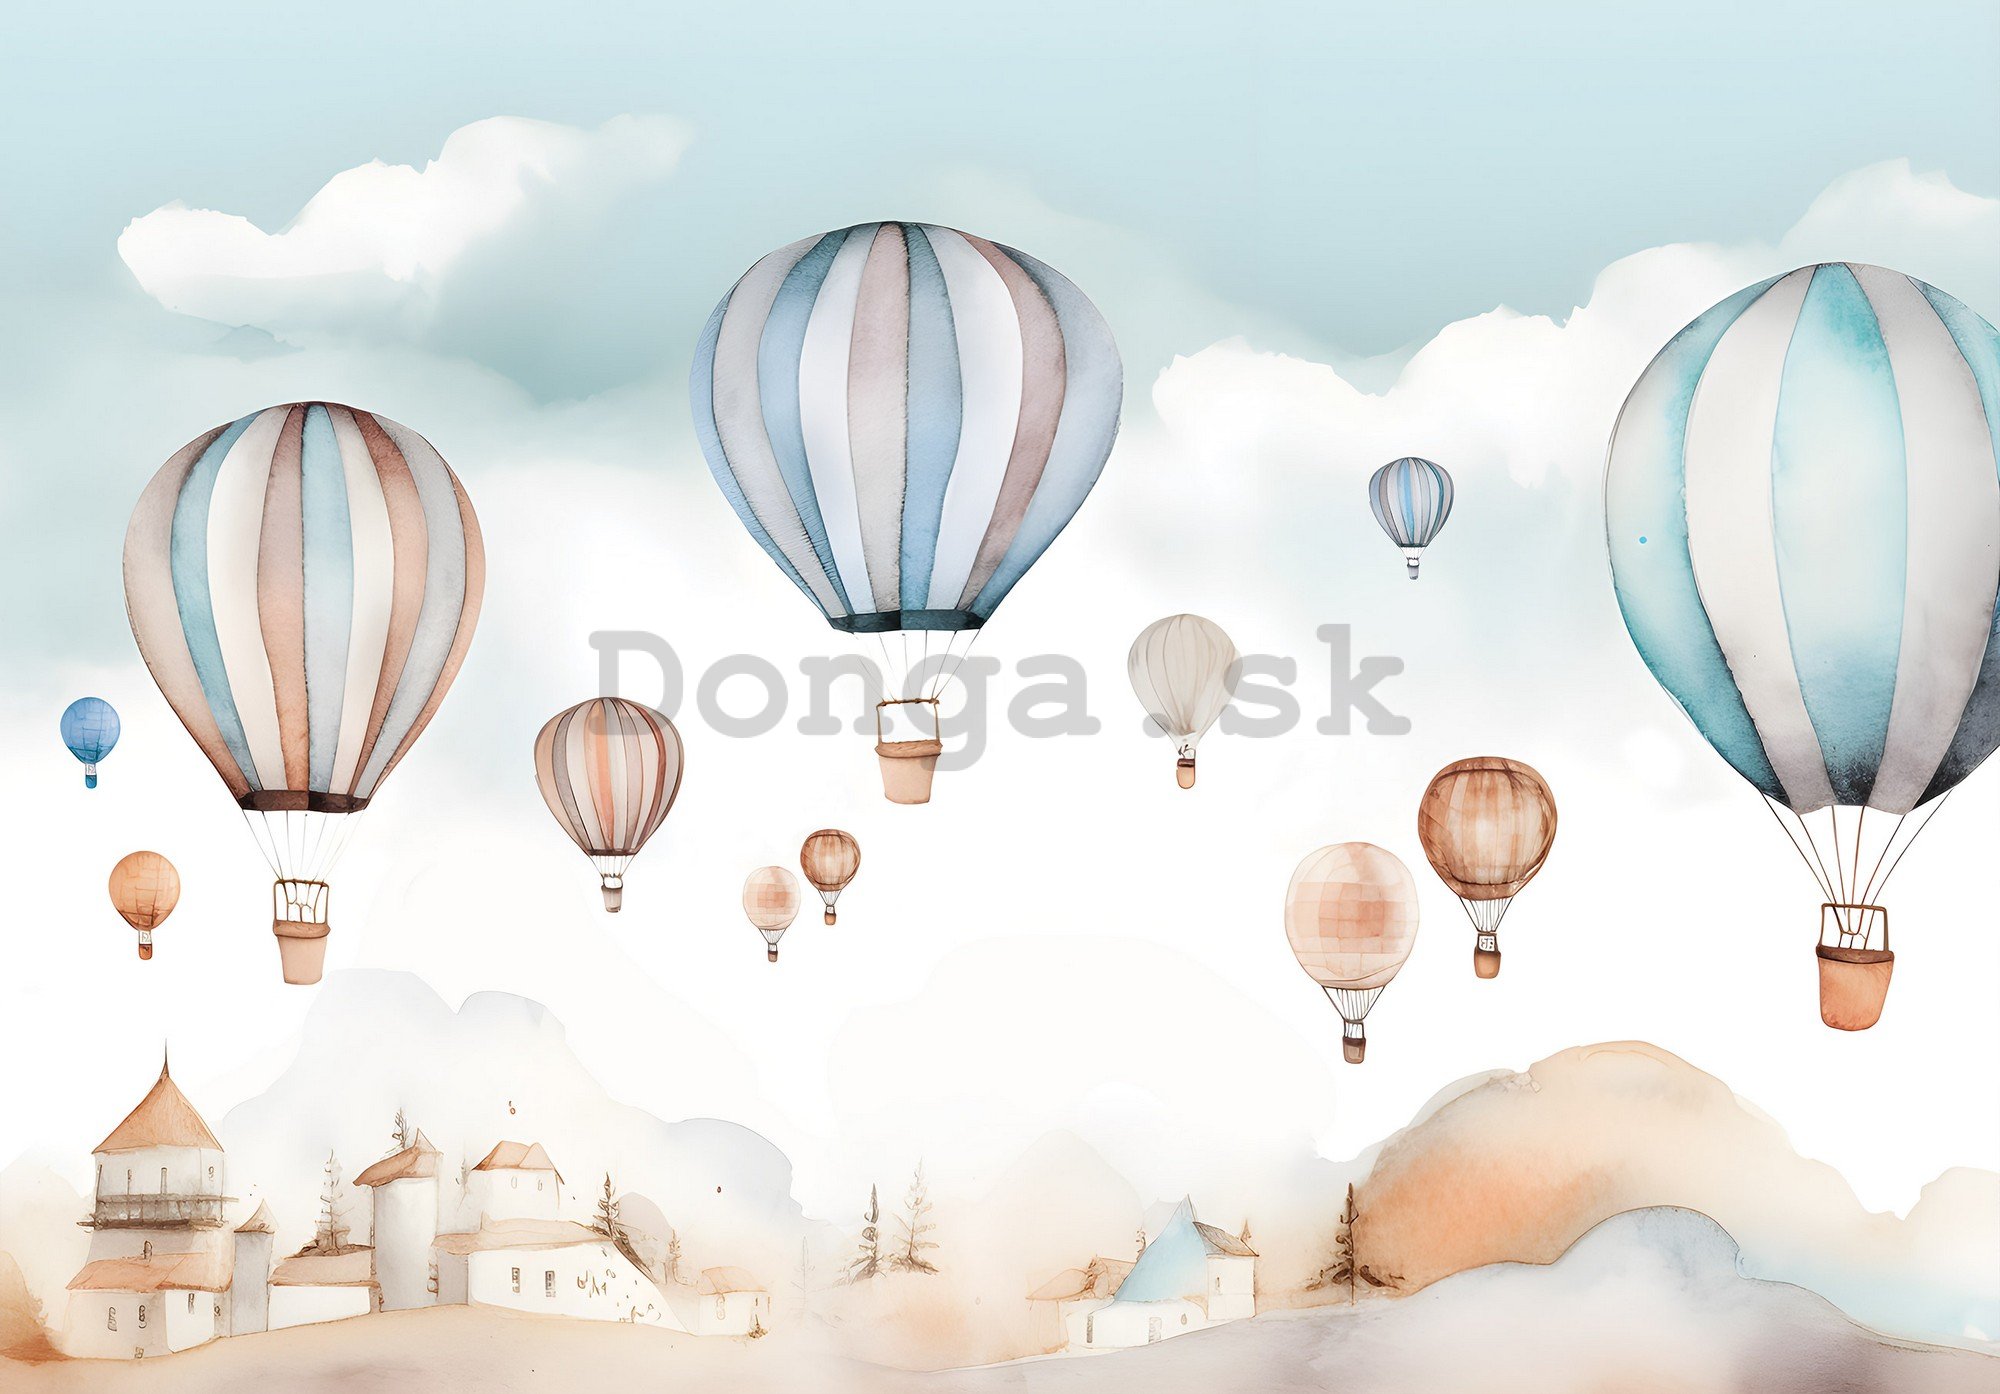 Fototapety vliesové: For kids fairytale watercolour balloons - 368x254 cm